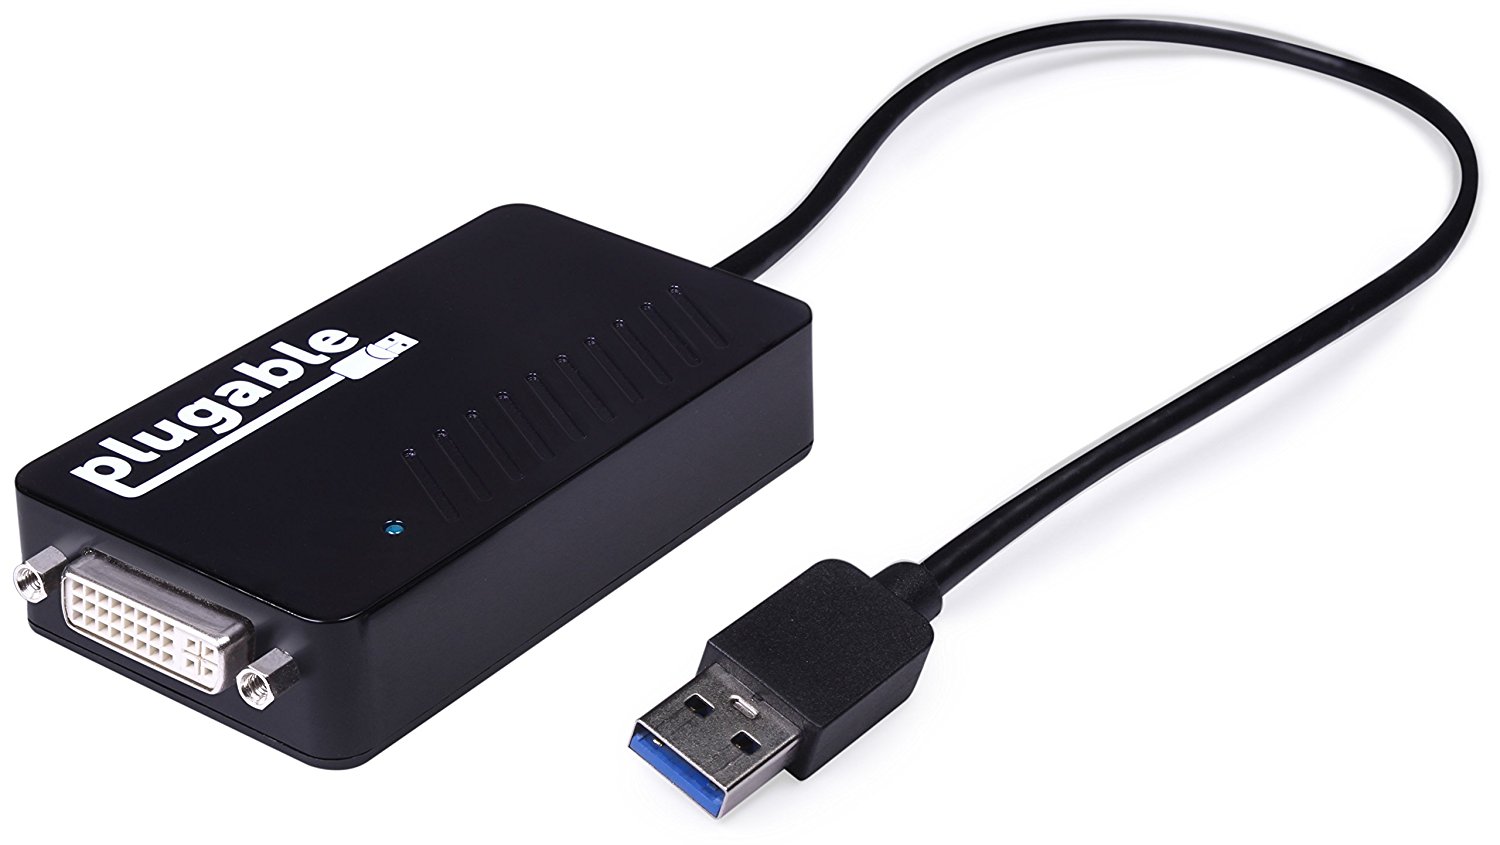 USB 3.0 PARA VGA / DVI / HDMI VIDEO AXDAPTADOR PARA MONITORES MULTIPLE HASTA 2048X1152 / 1920X1080 (SOPPORTA WINDOWS 10 8.1 7 XP)